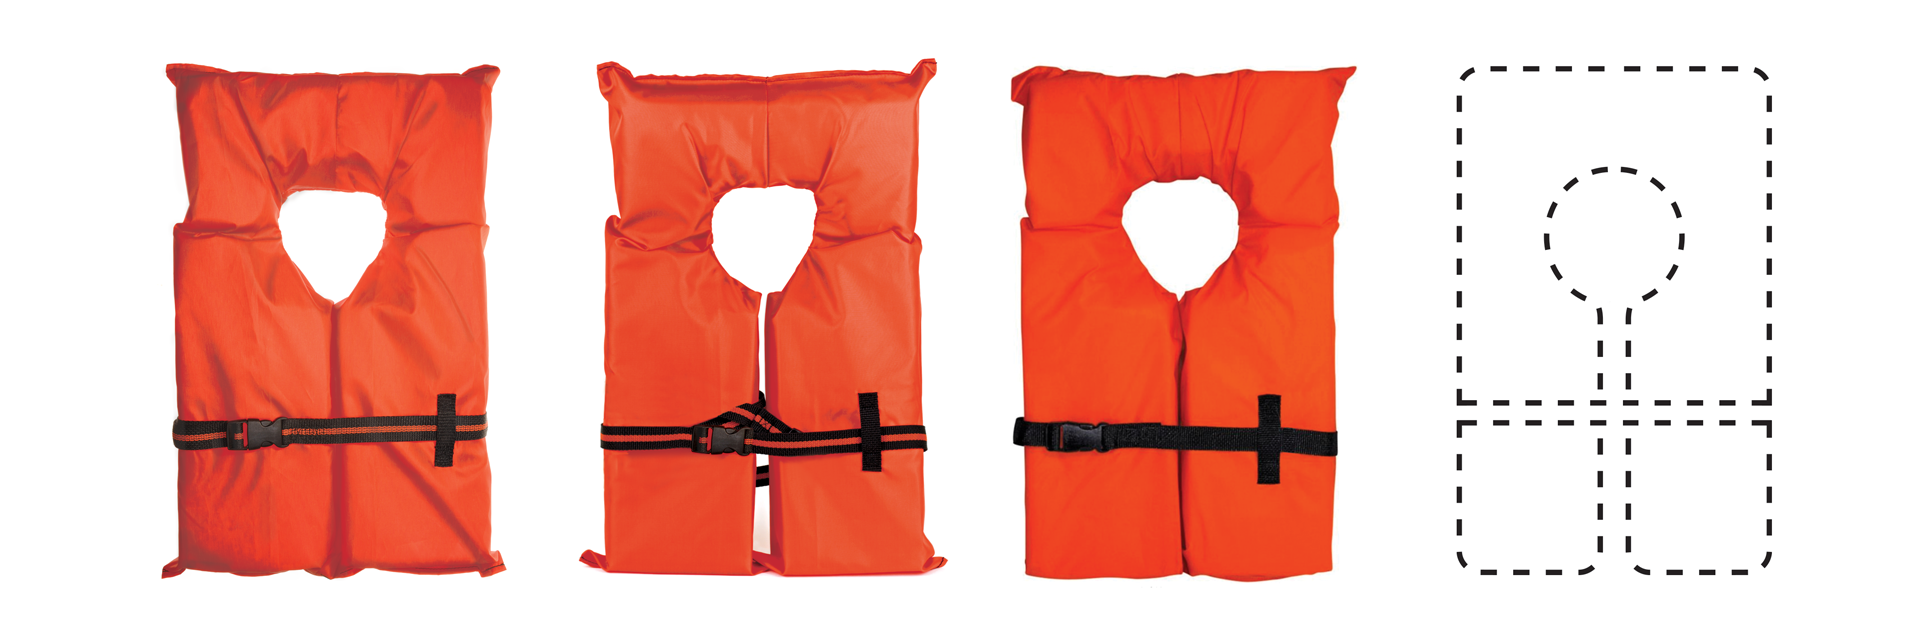 illustration of three orange life vests and one dotted-line outline of a life vest